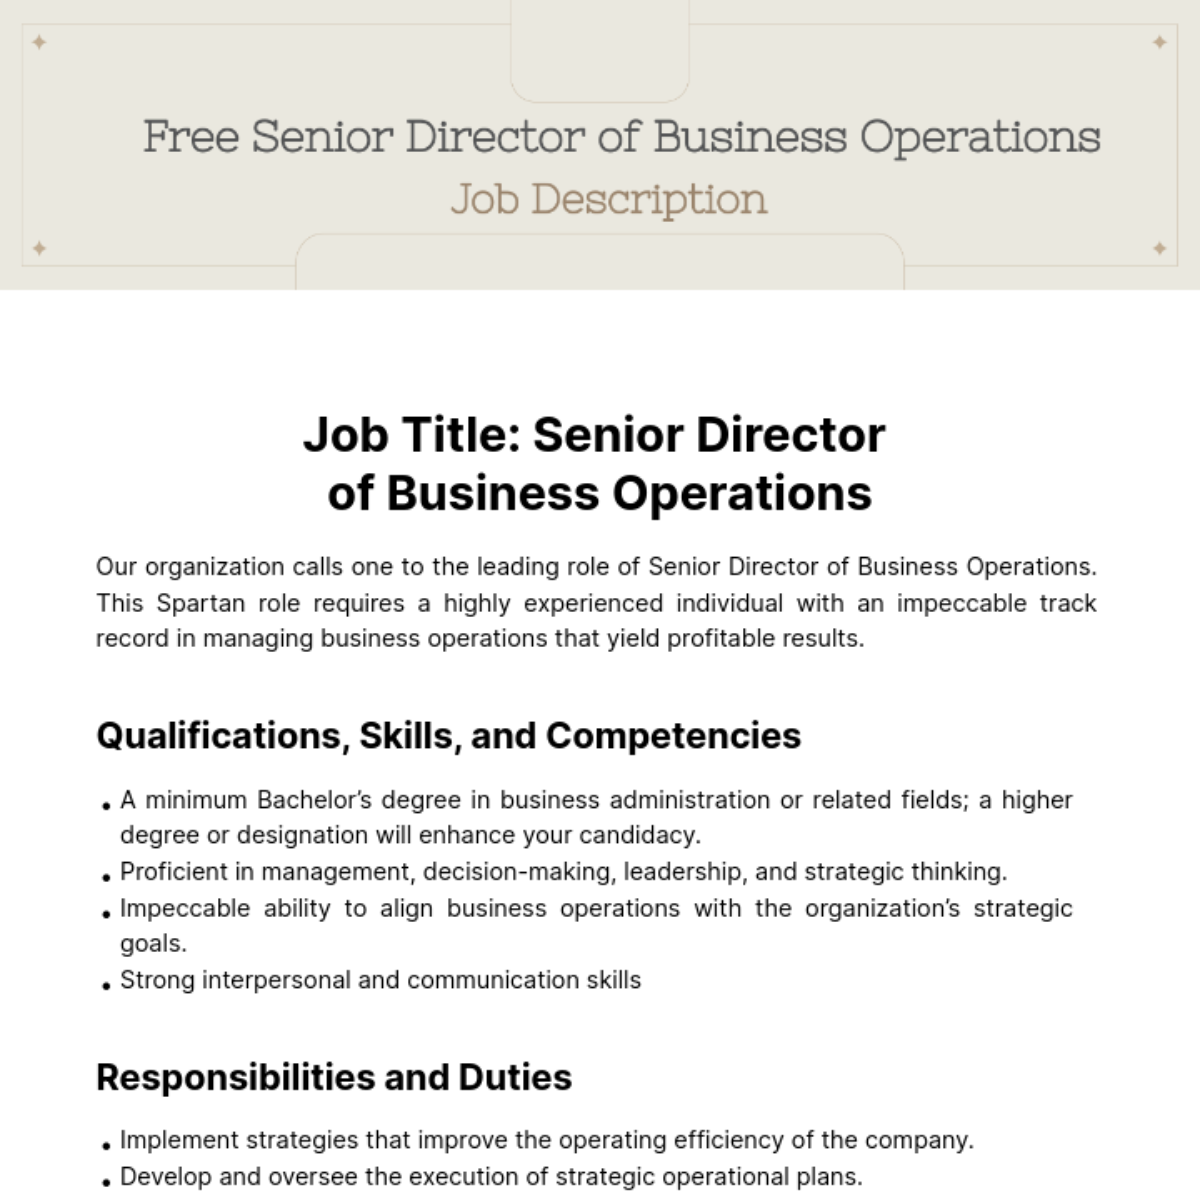 Free Senior Director of Business Operations Job Description Template